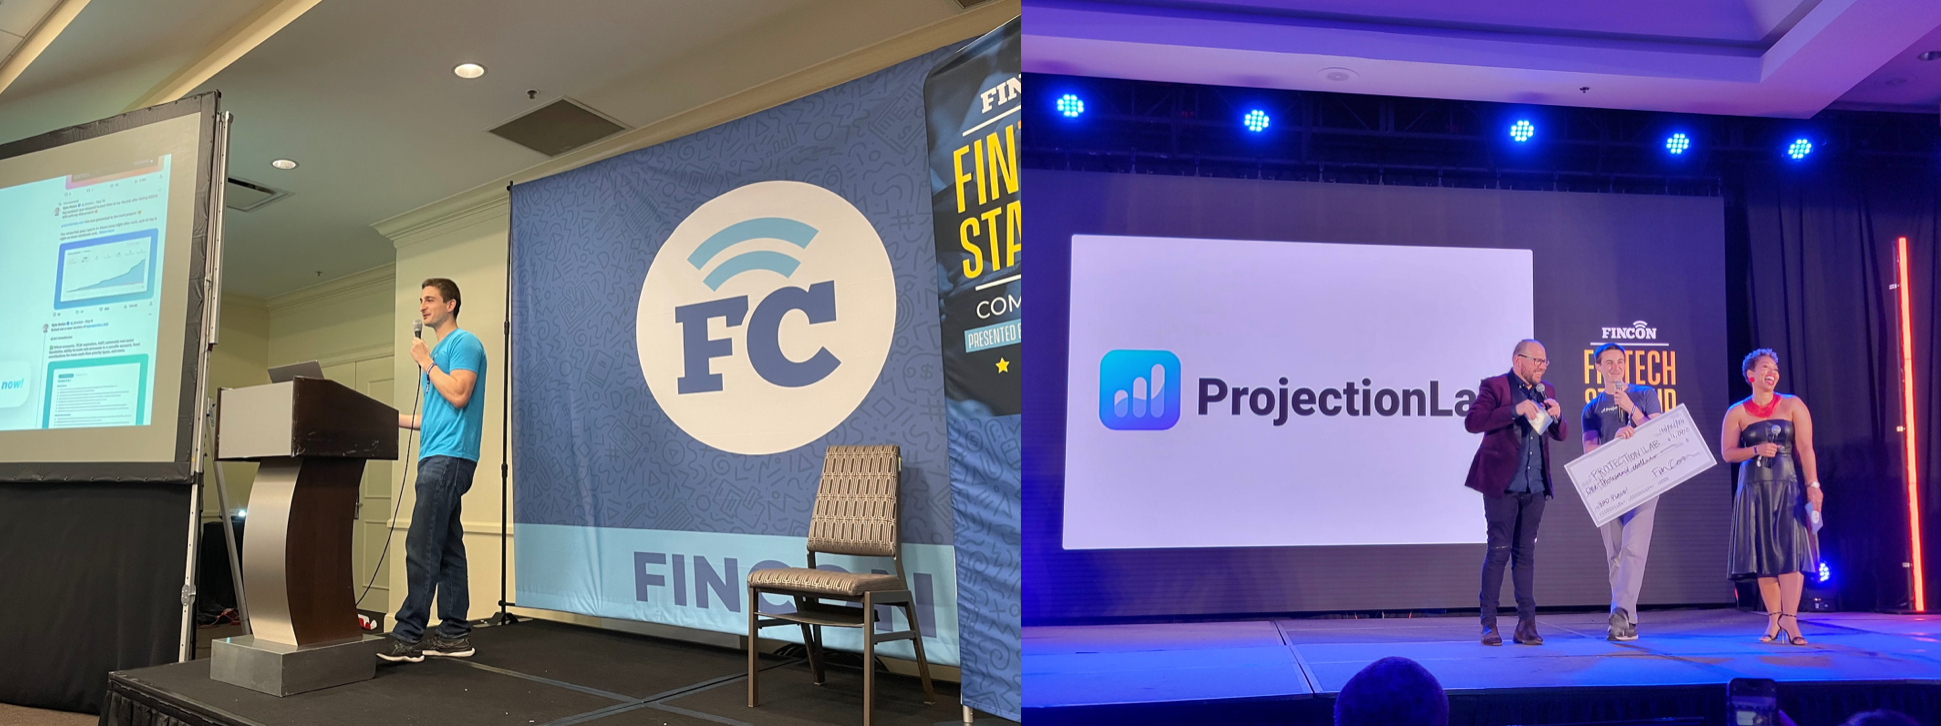 FinCon Presentation and Awards